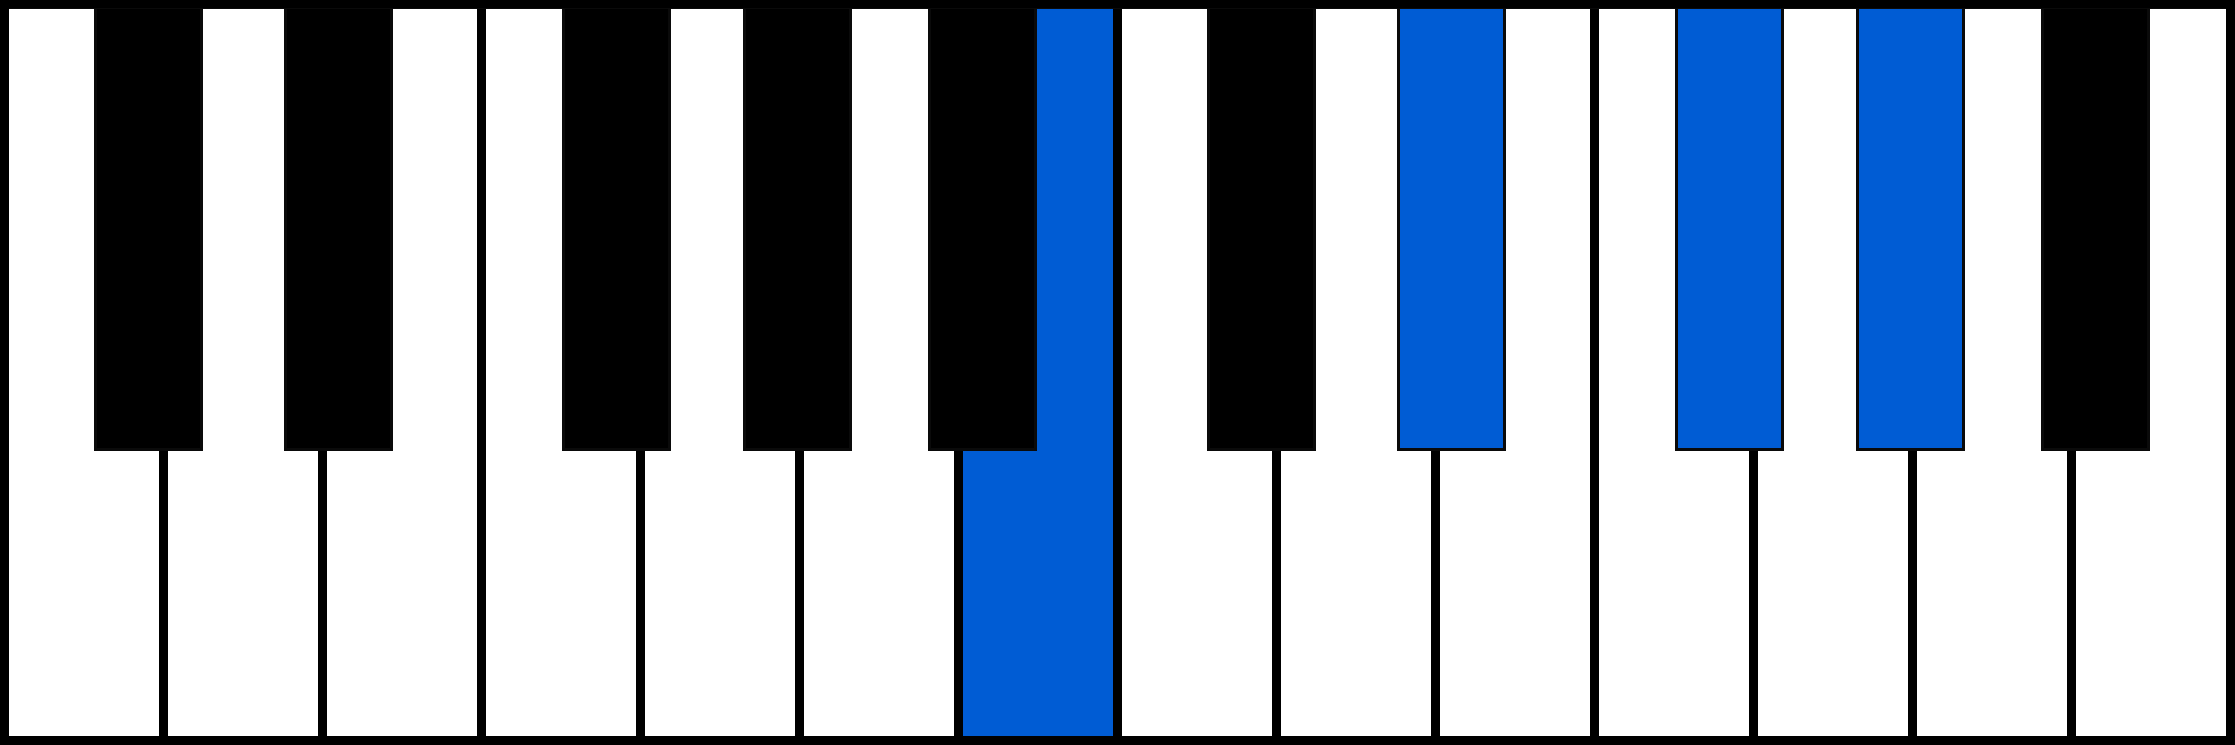 B6 piano chord